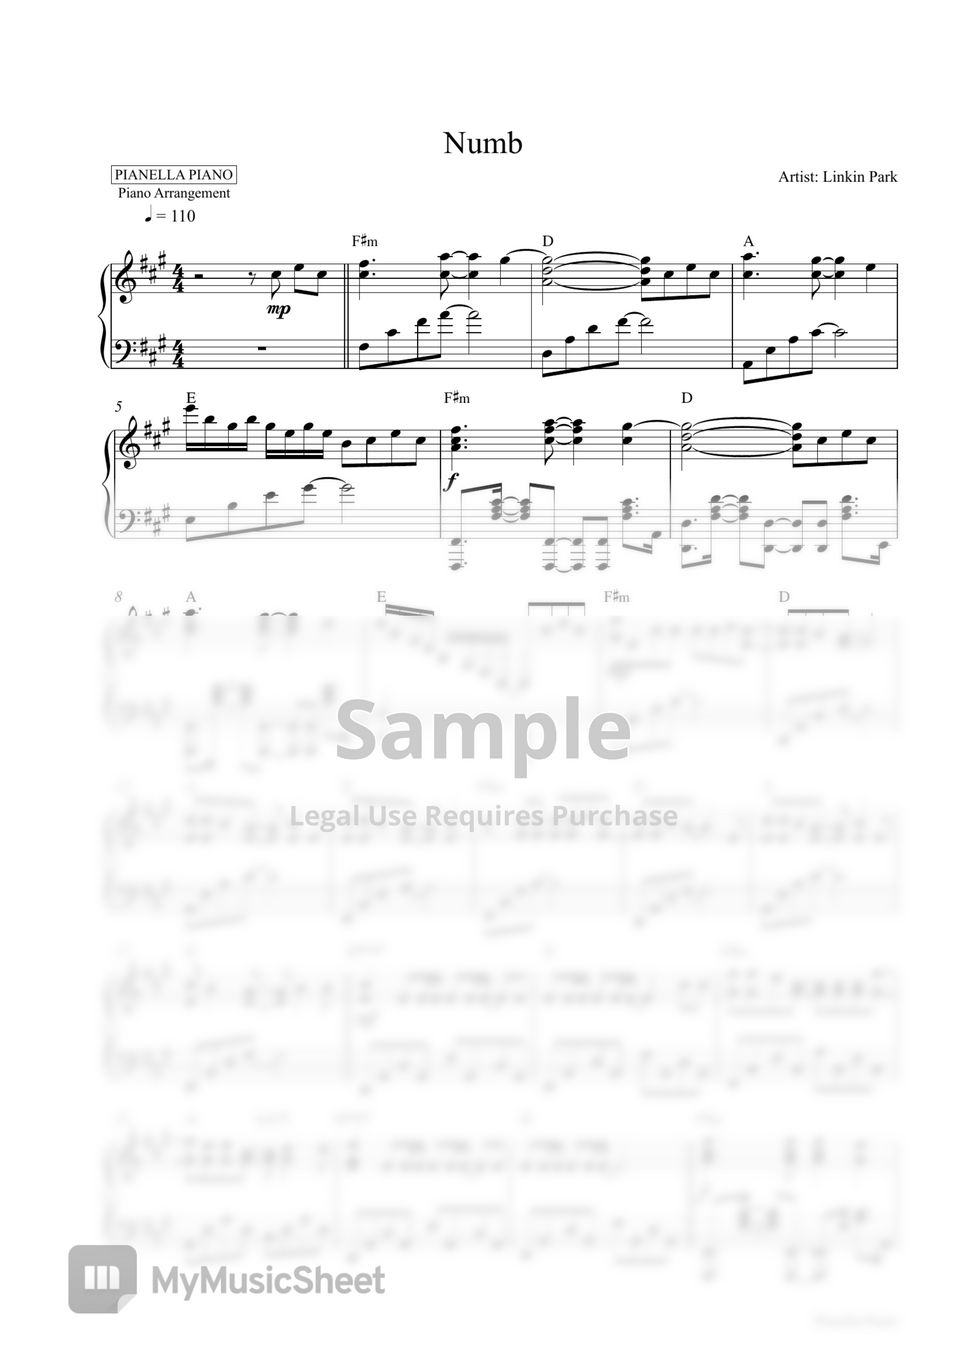 Linkin Park - Numb (Piano Sheet) by Pianella Piano